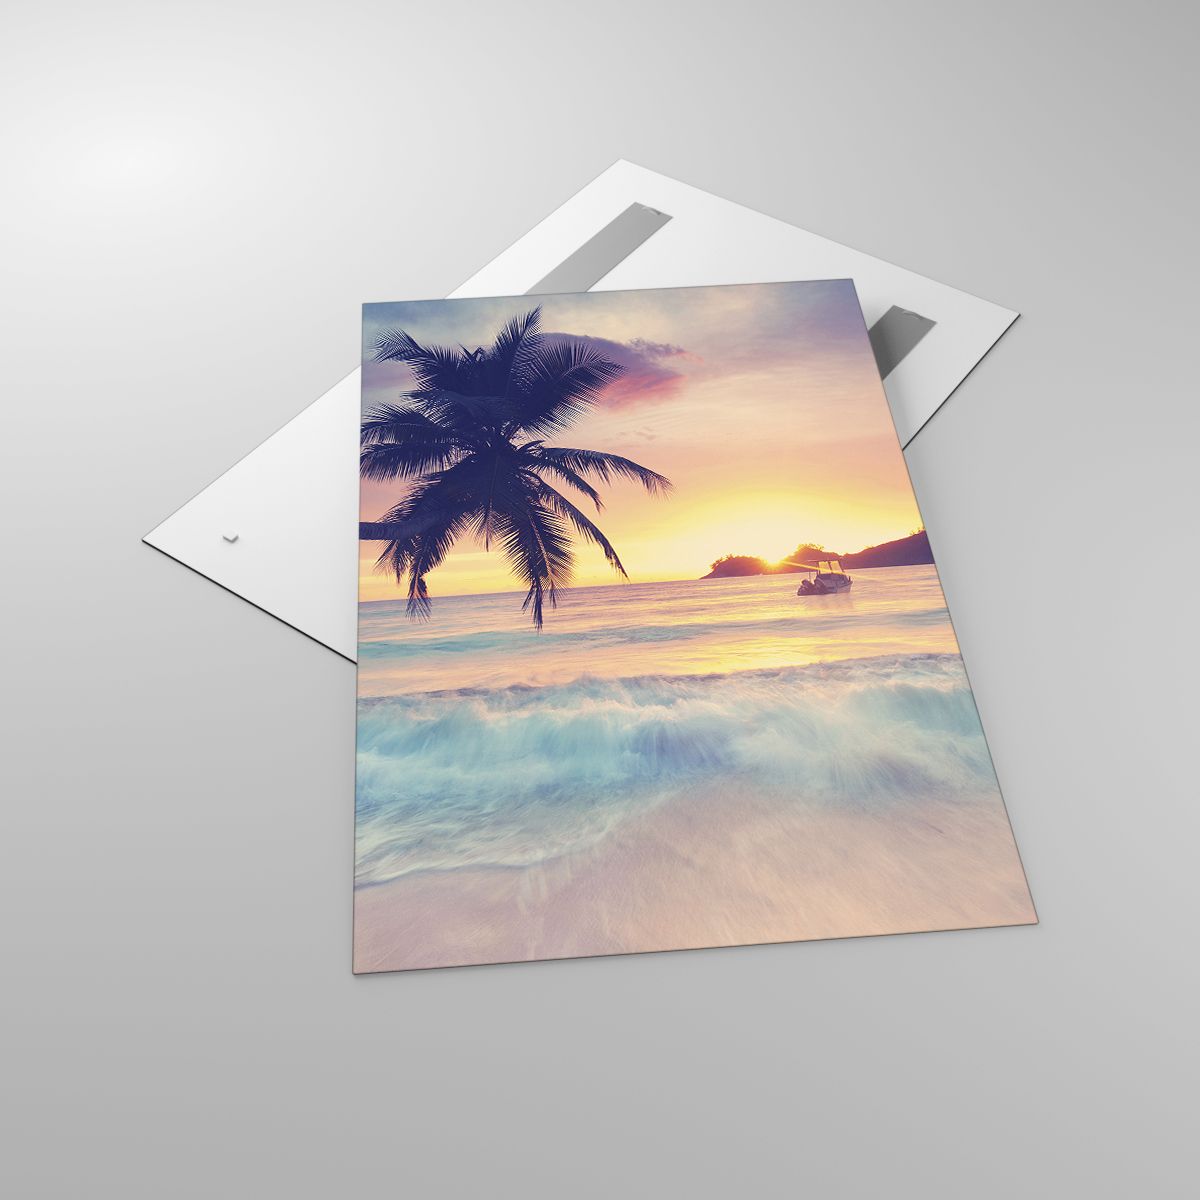 Glasbild Landschaft, Glasbild Kokusnuss-Palme, Glasbild Meer, Glasbild Strand, Glasbild Der Sonnenuntergang